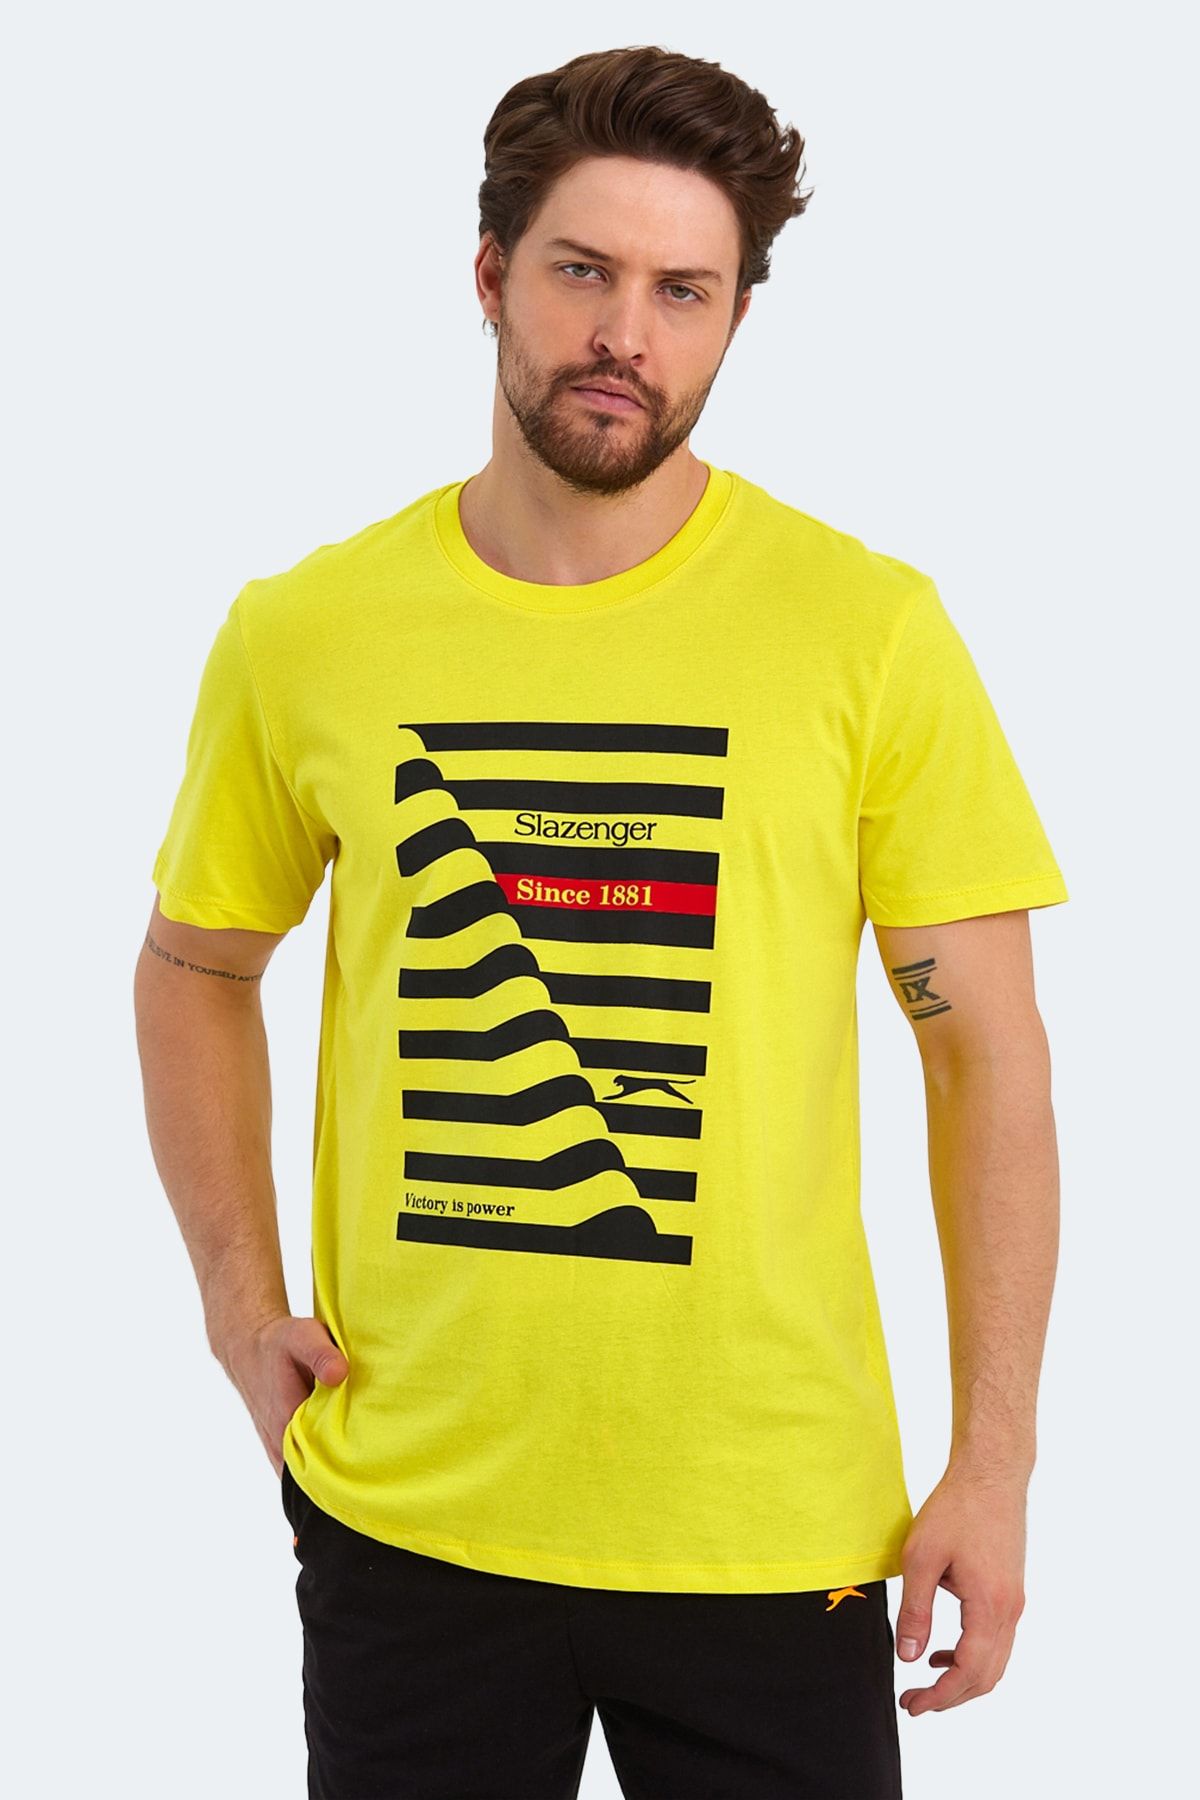 Slazenger Katell Over Erkek T-shirt Açık Sarı